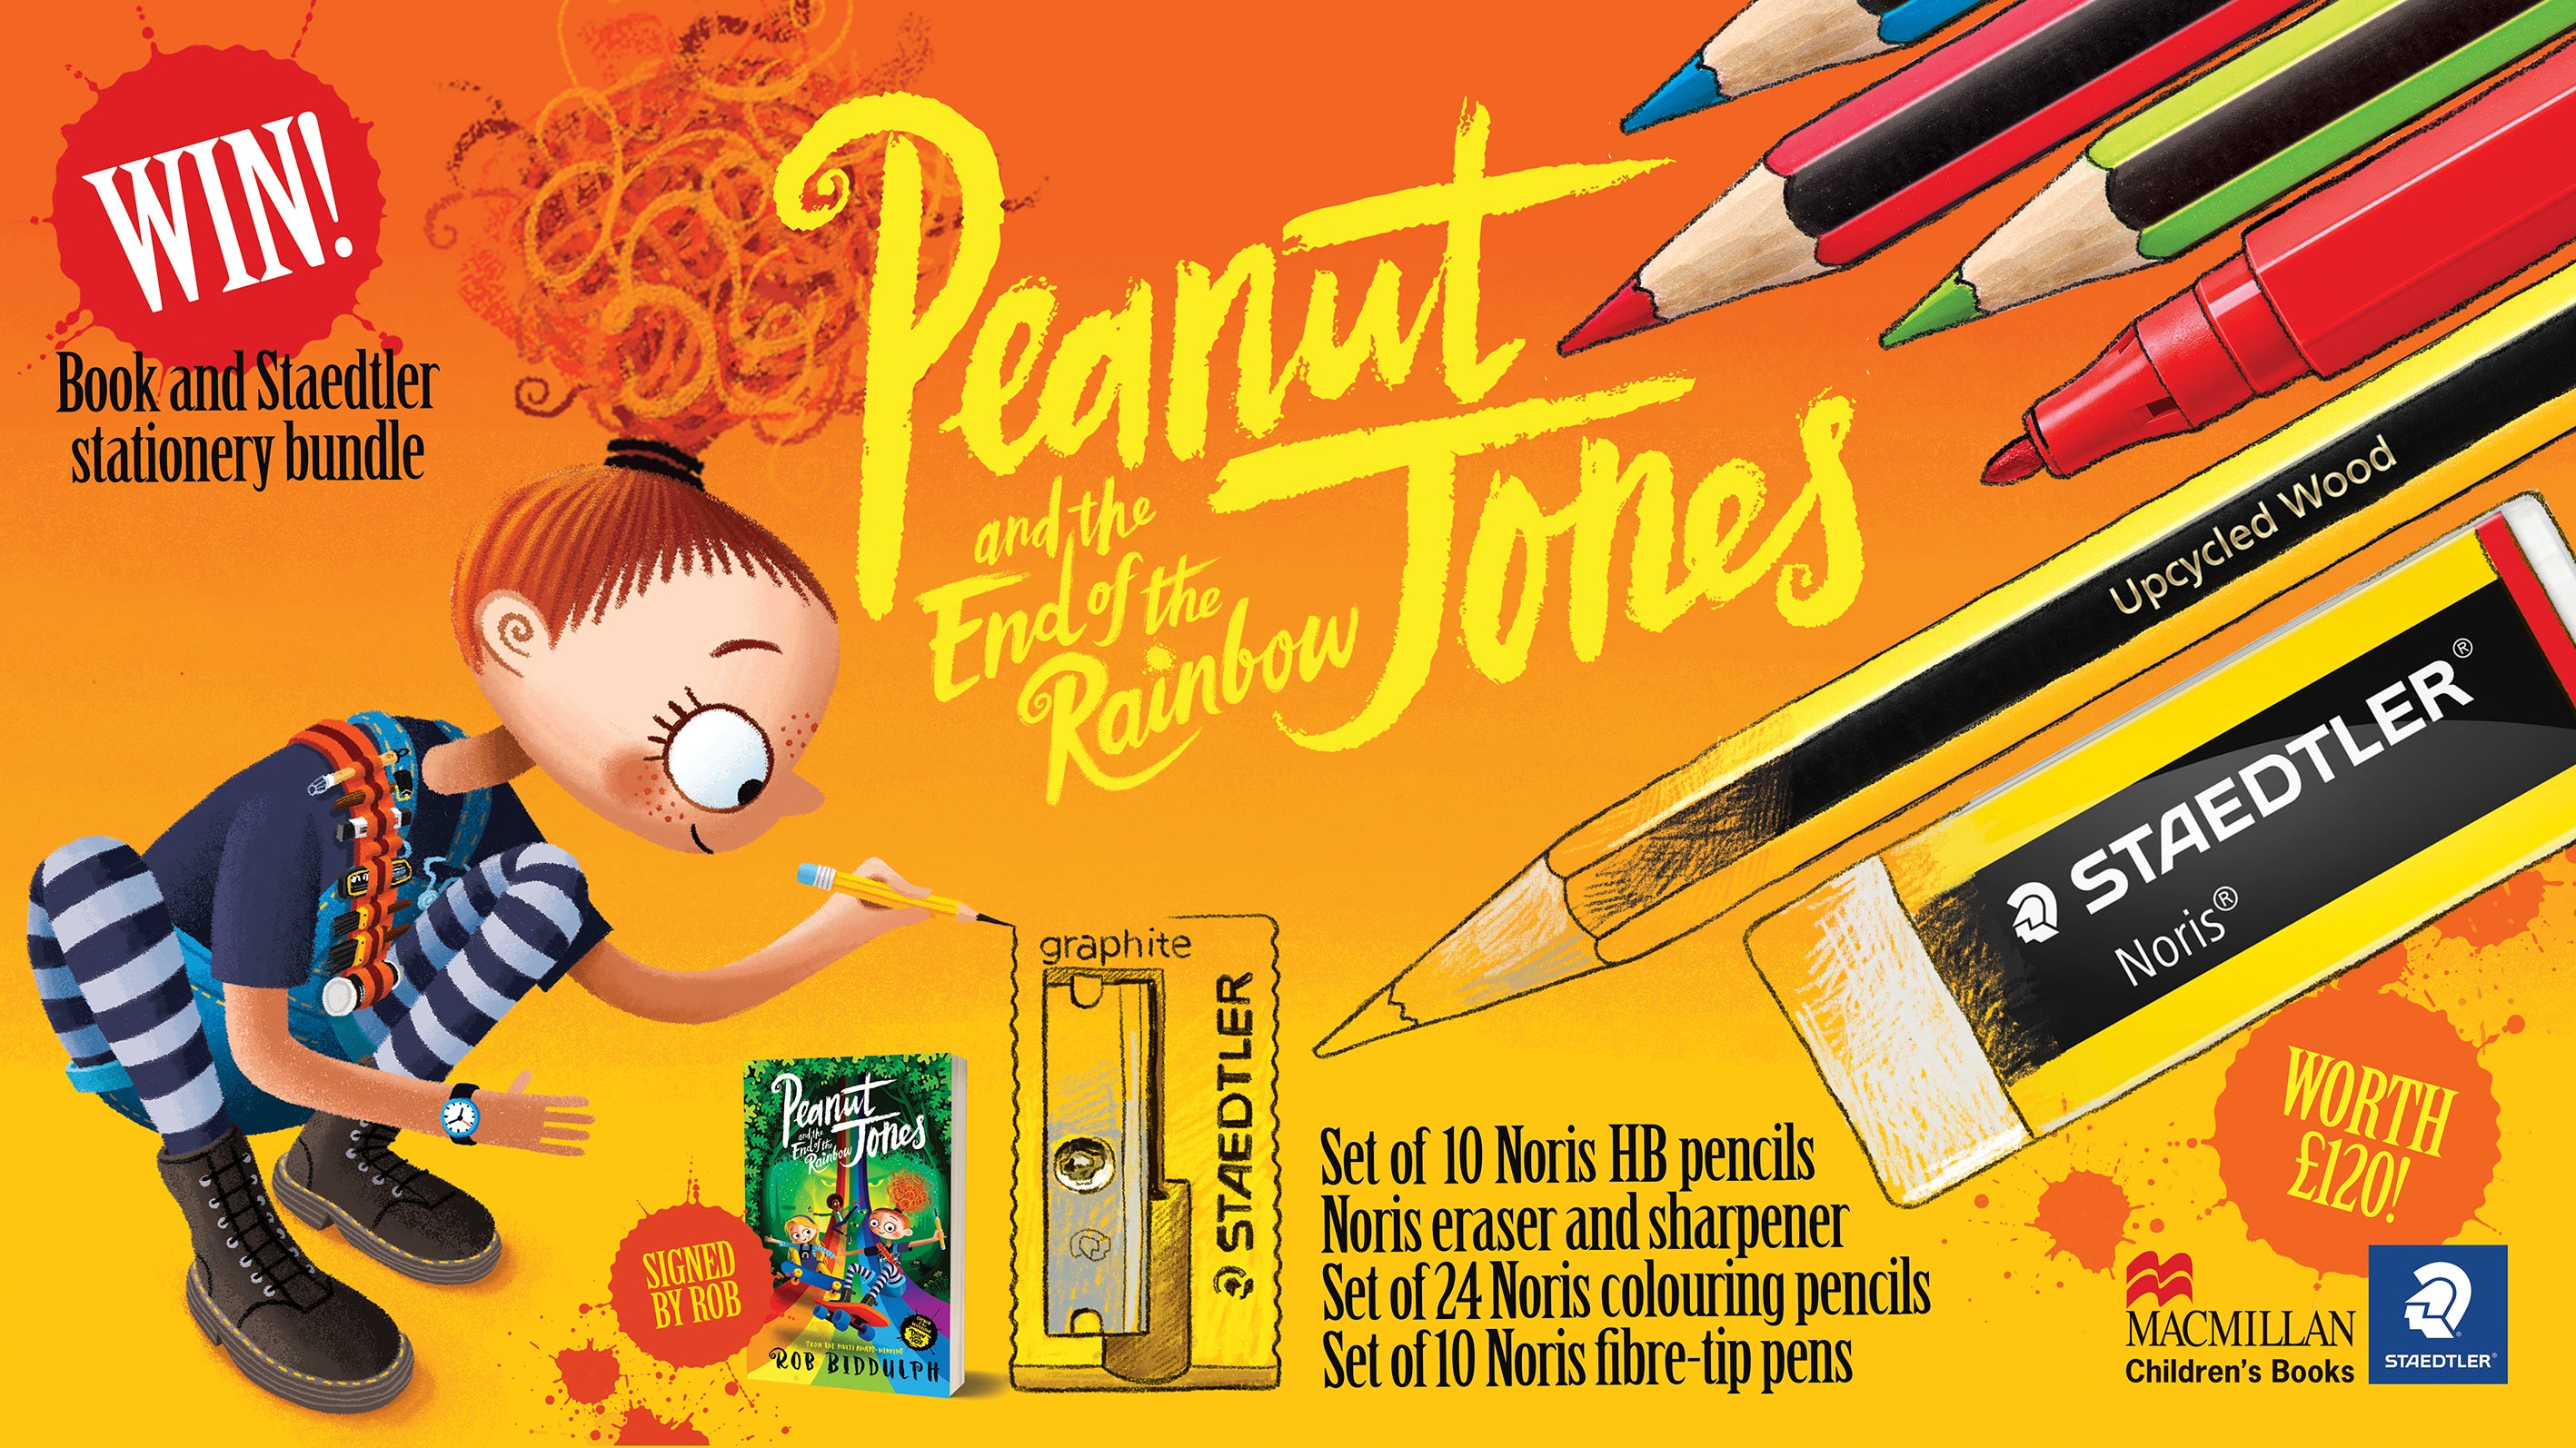 Peanut Jones character illustrations plus stationary pens and pencils